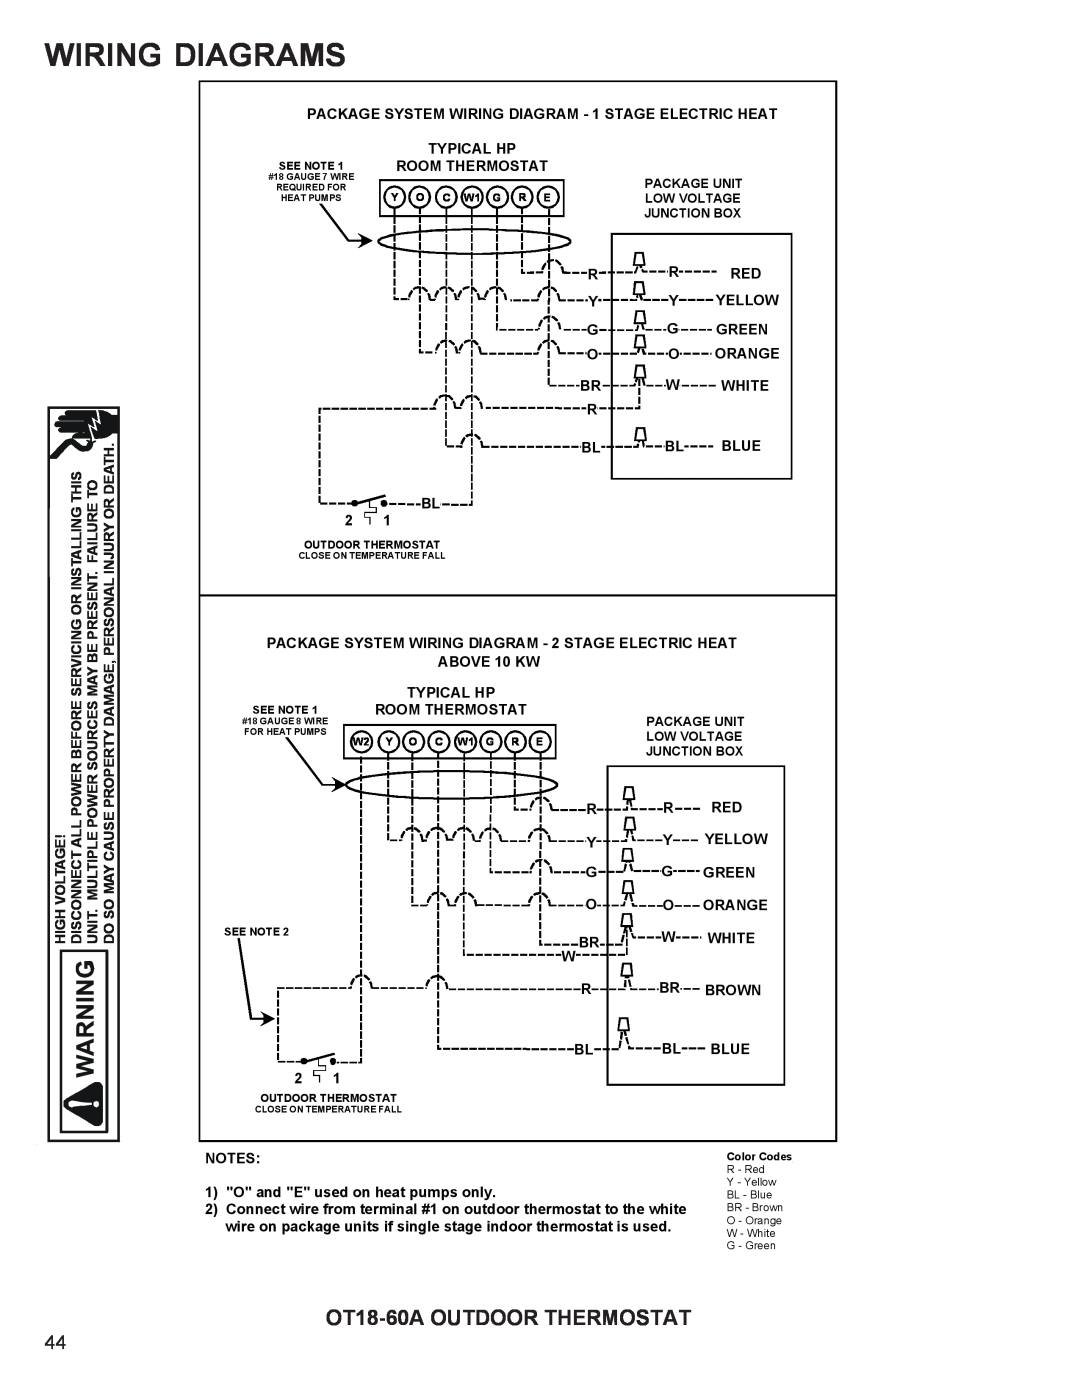 Goodman Mfg R-410A manual Wiring Diagrams, OT18-60AOUTDOOR THERMOSTAT 